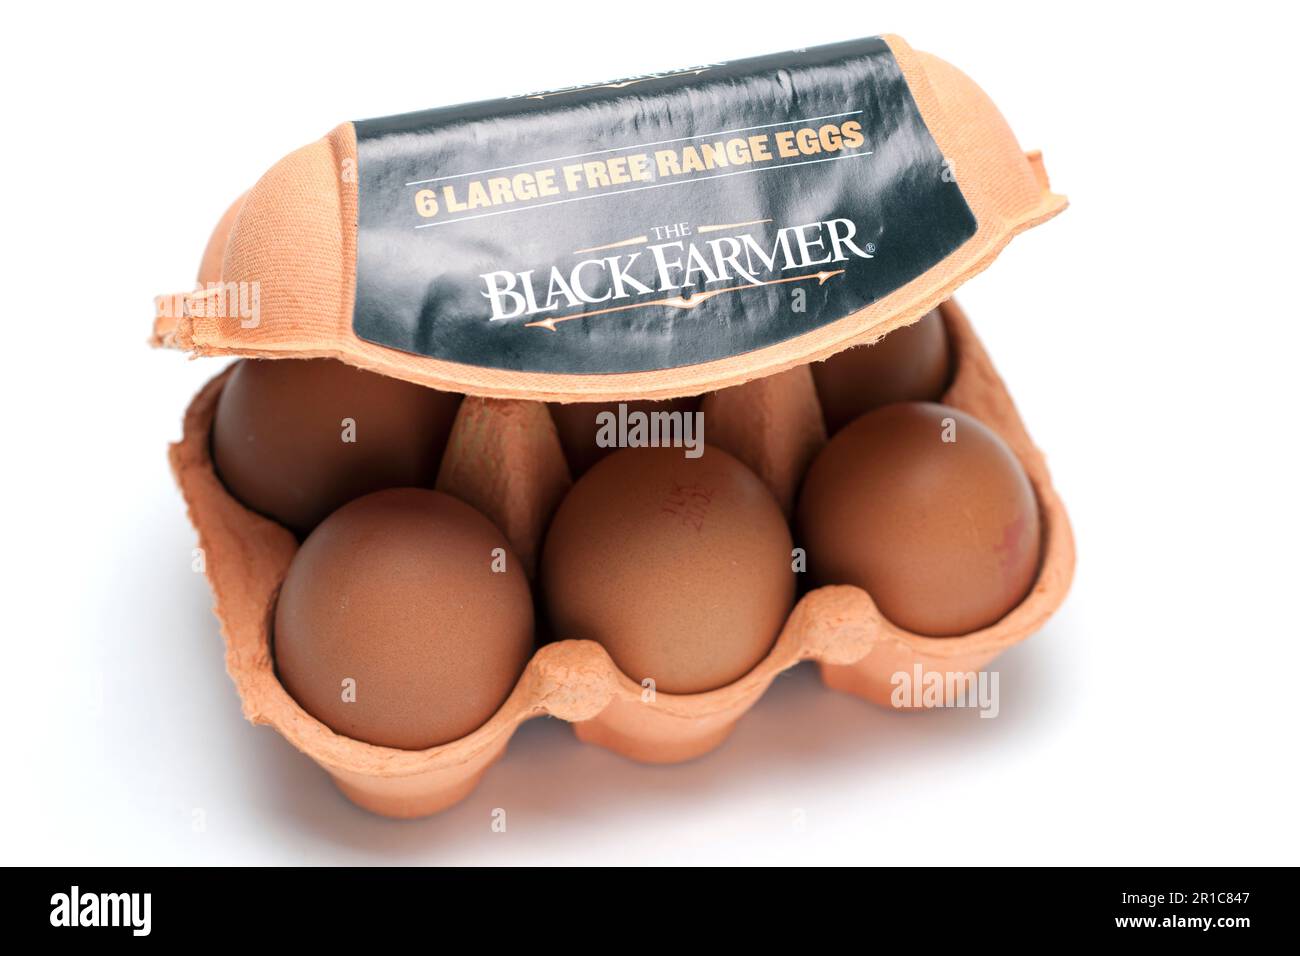 The Blackfarmer 6 packed  LARGE FREE RANGE EGGS Stock Photo